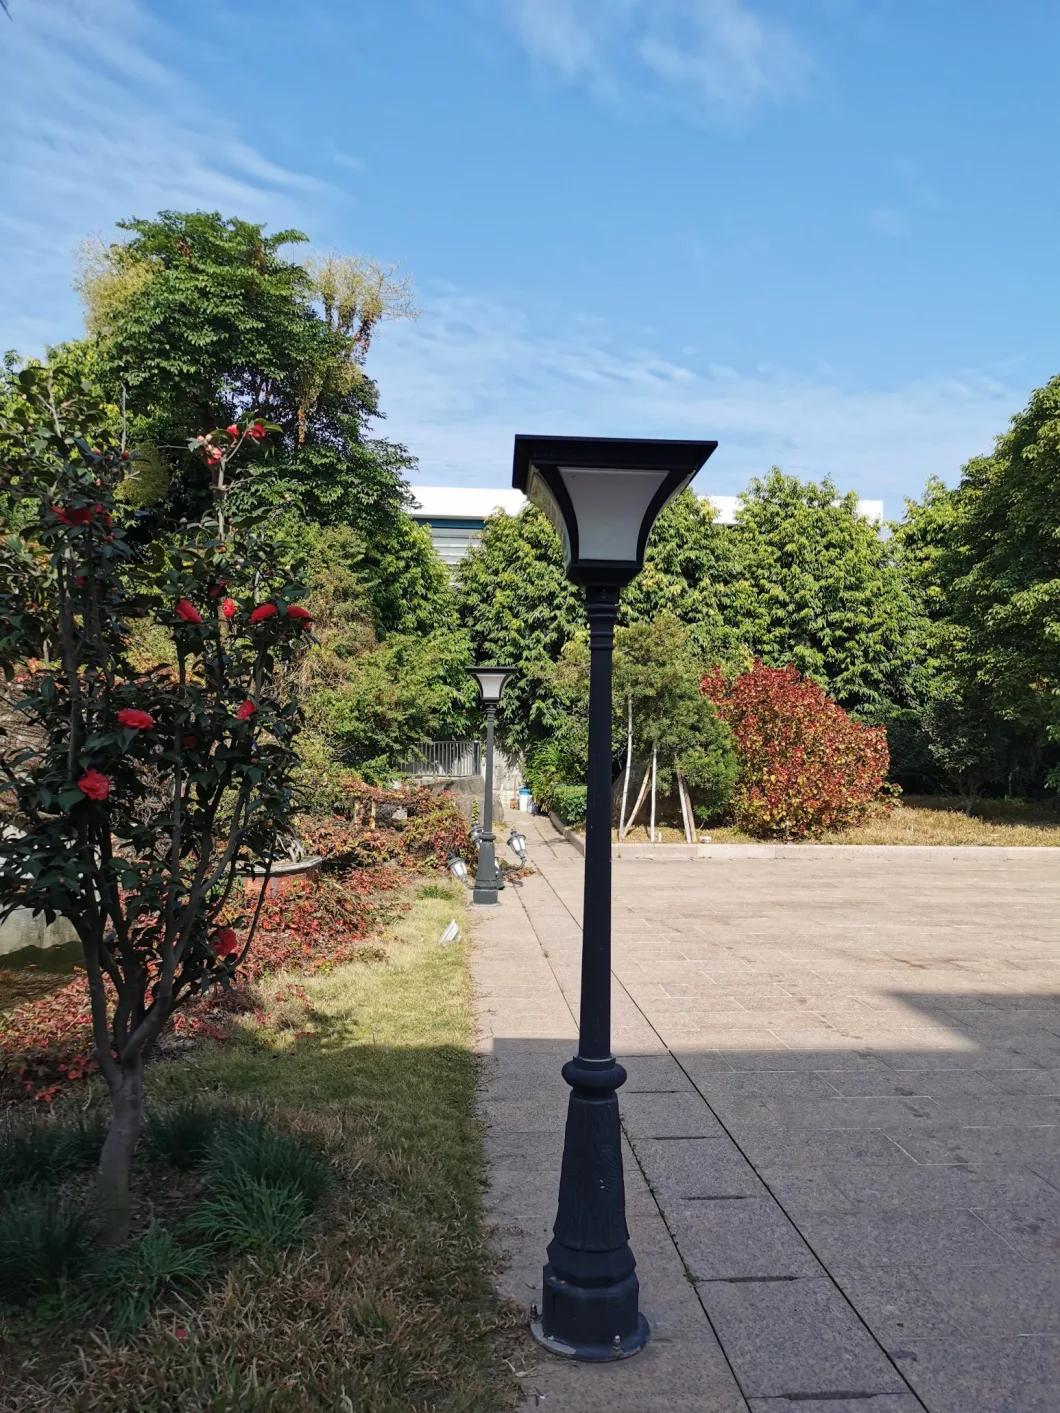 50W All-in-One Outdoor Solar Street Garden Light LED Lamp Lights Lighting Decoration Energy Saving Power System Home Lamps Bulb Products Lightings Sensor Light